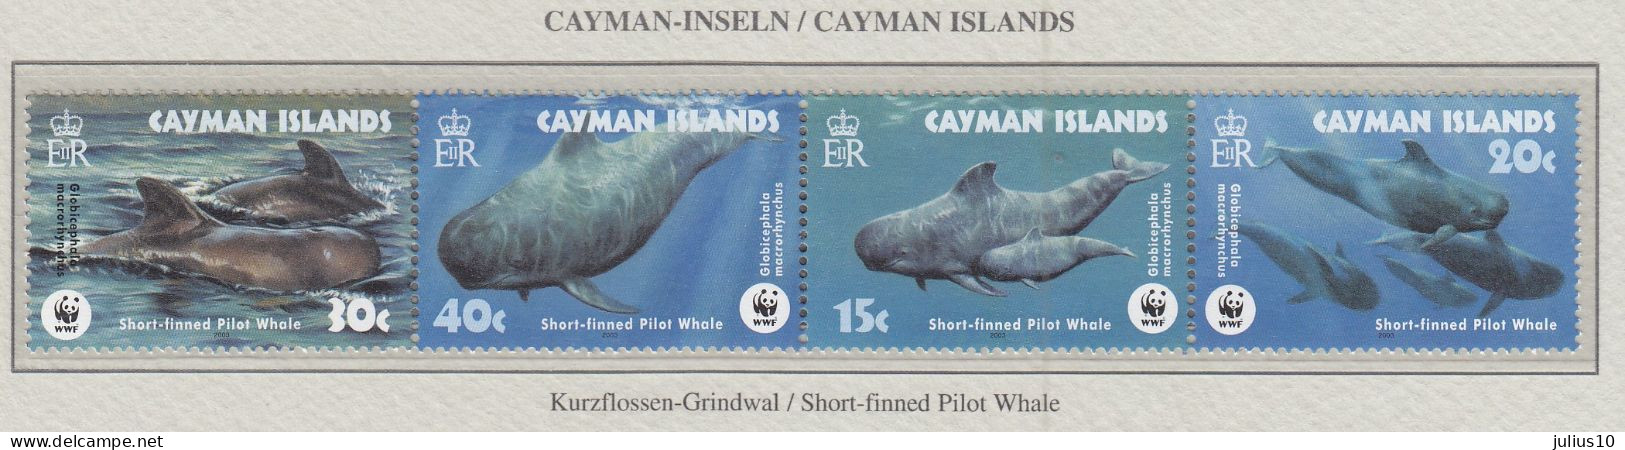 CAYMAN ISLANDS 2003 WWF Whales Mi 970-973 MNH Fauna 669 - Wale